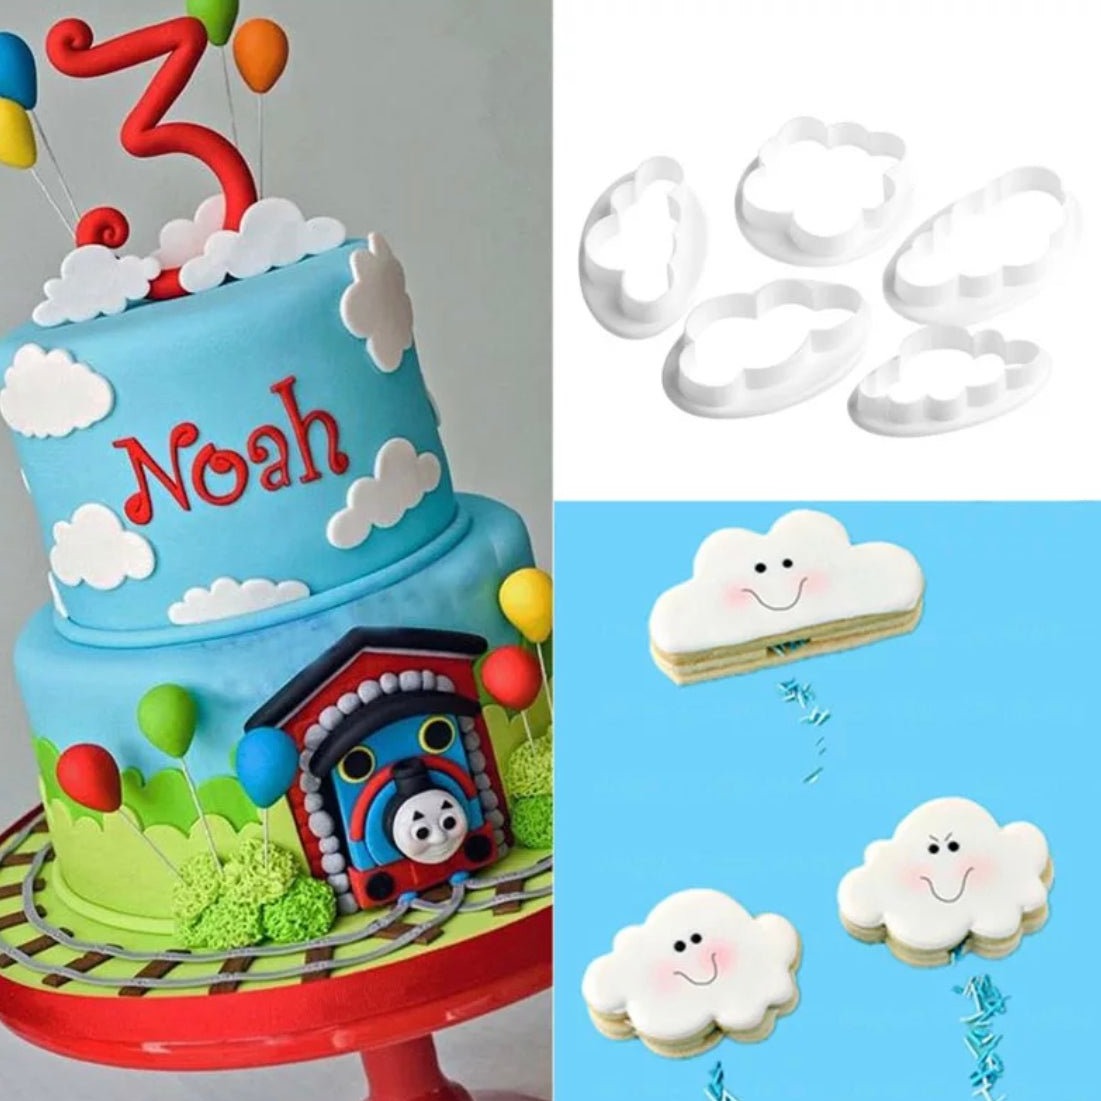 Bakewareind Cloud Cookie Fondant Cake Cutter - Bakewareindia